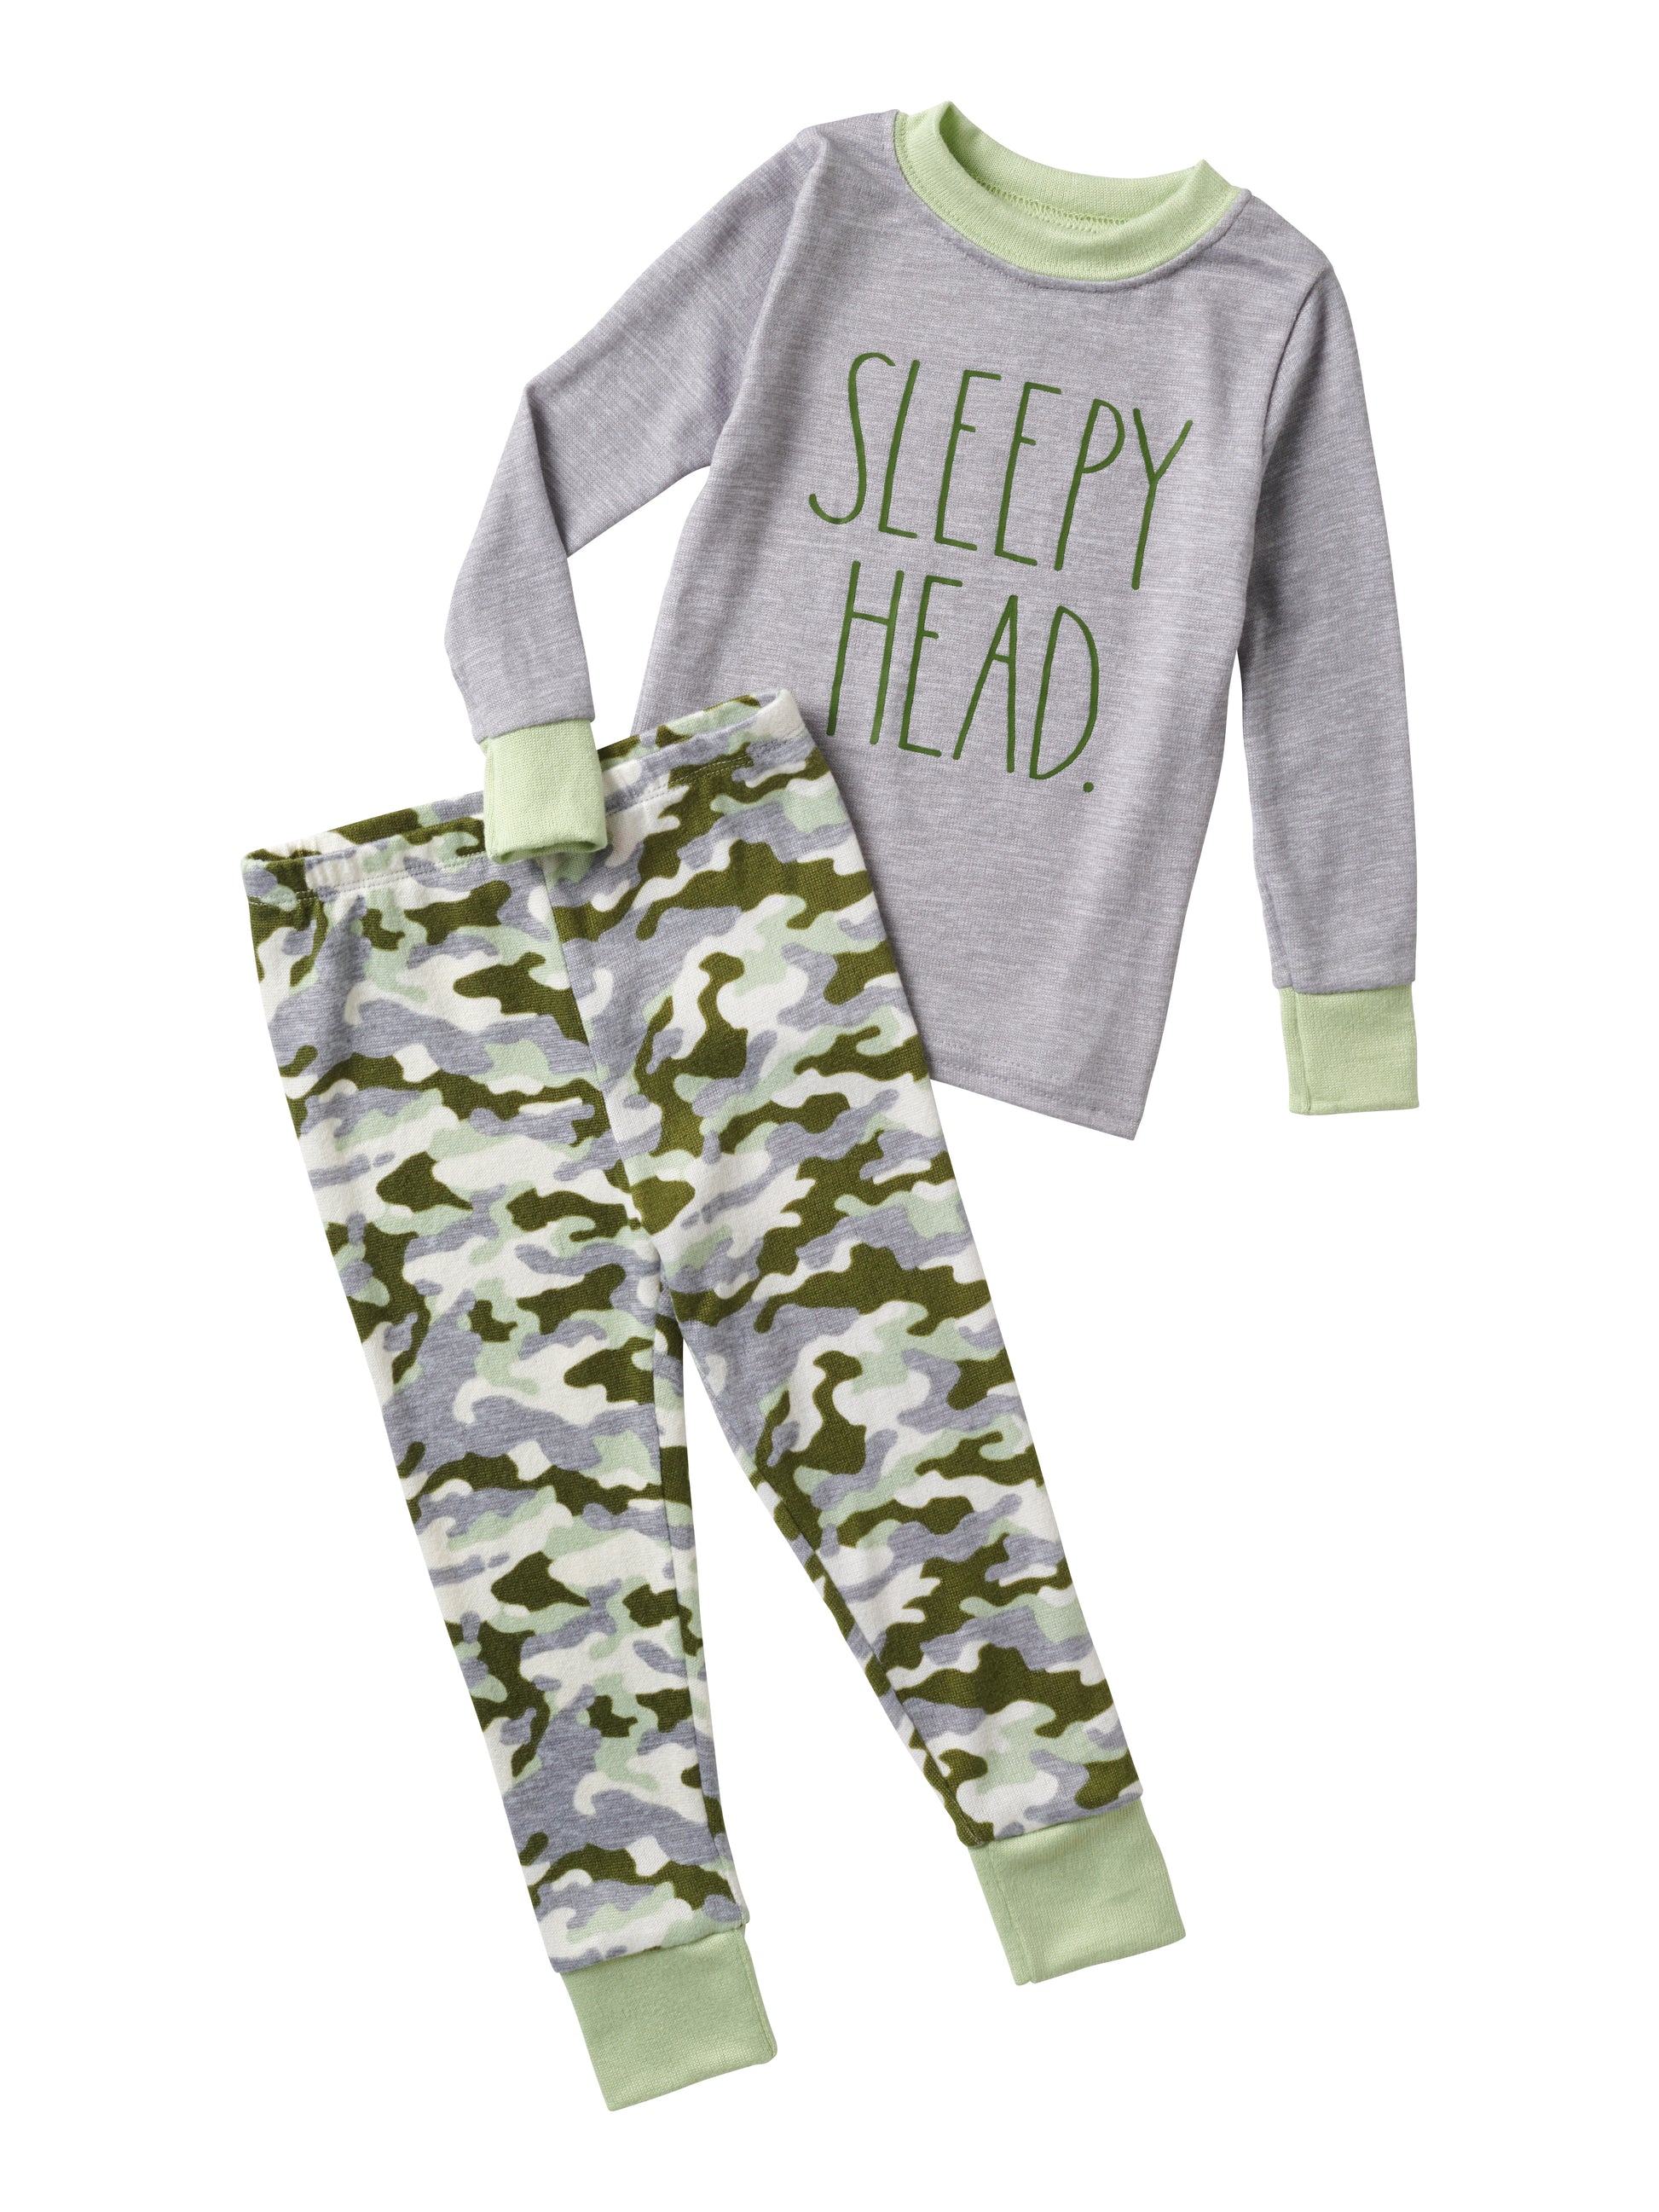 Boys' "SLEEPY HEAD" Long Sleeve Top and Joggers Pajama Set - Rae Dunn Wear - B Pant Set